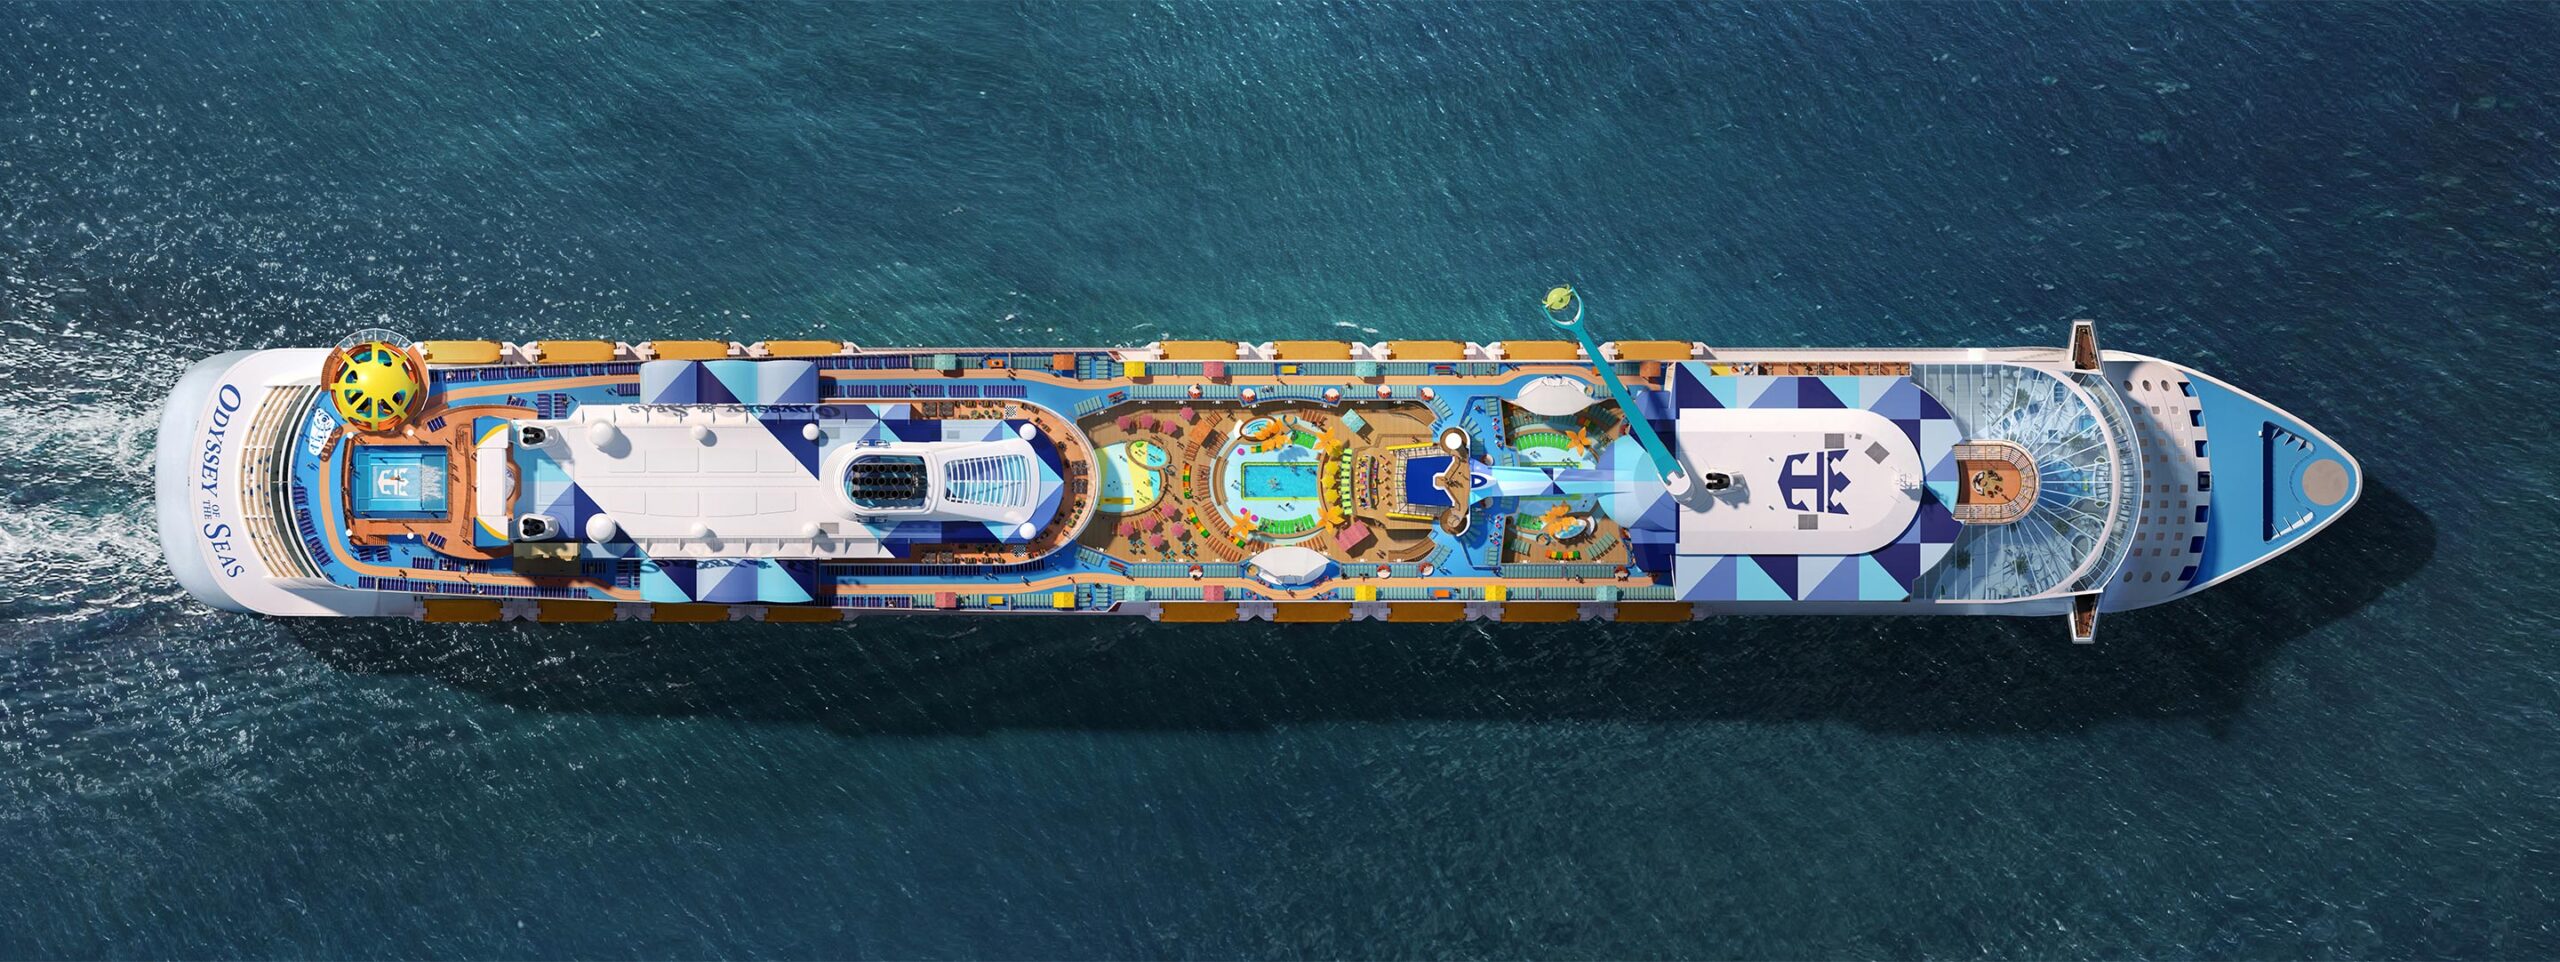 odyssey of sea cruise